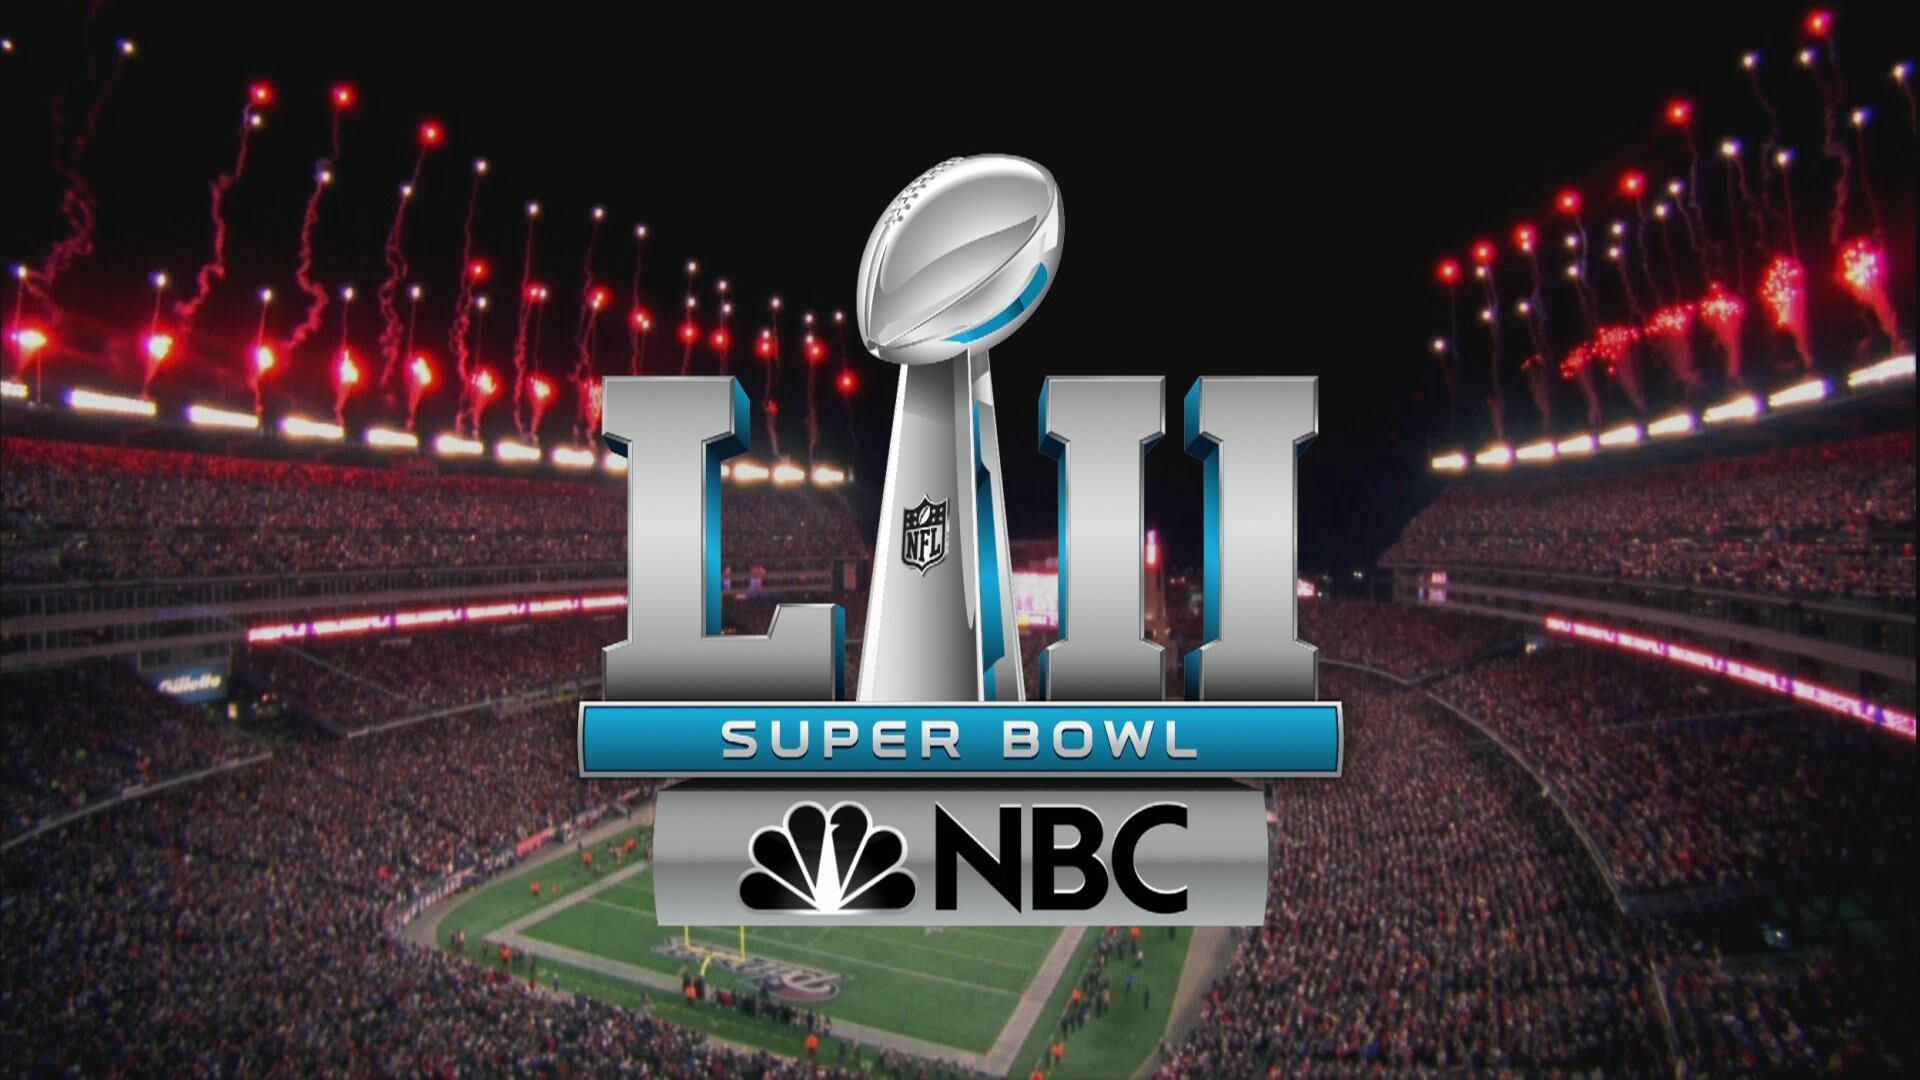 Road to the Super Bowl Sweepstakes - Super Bowl 2018 - NBC.com